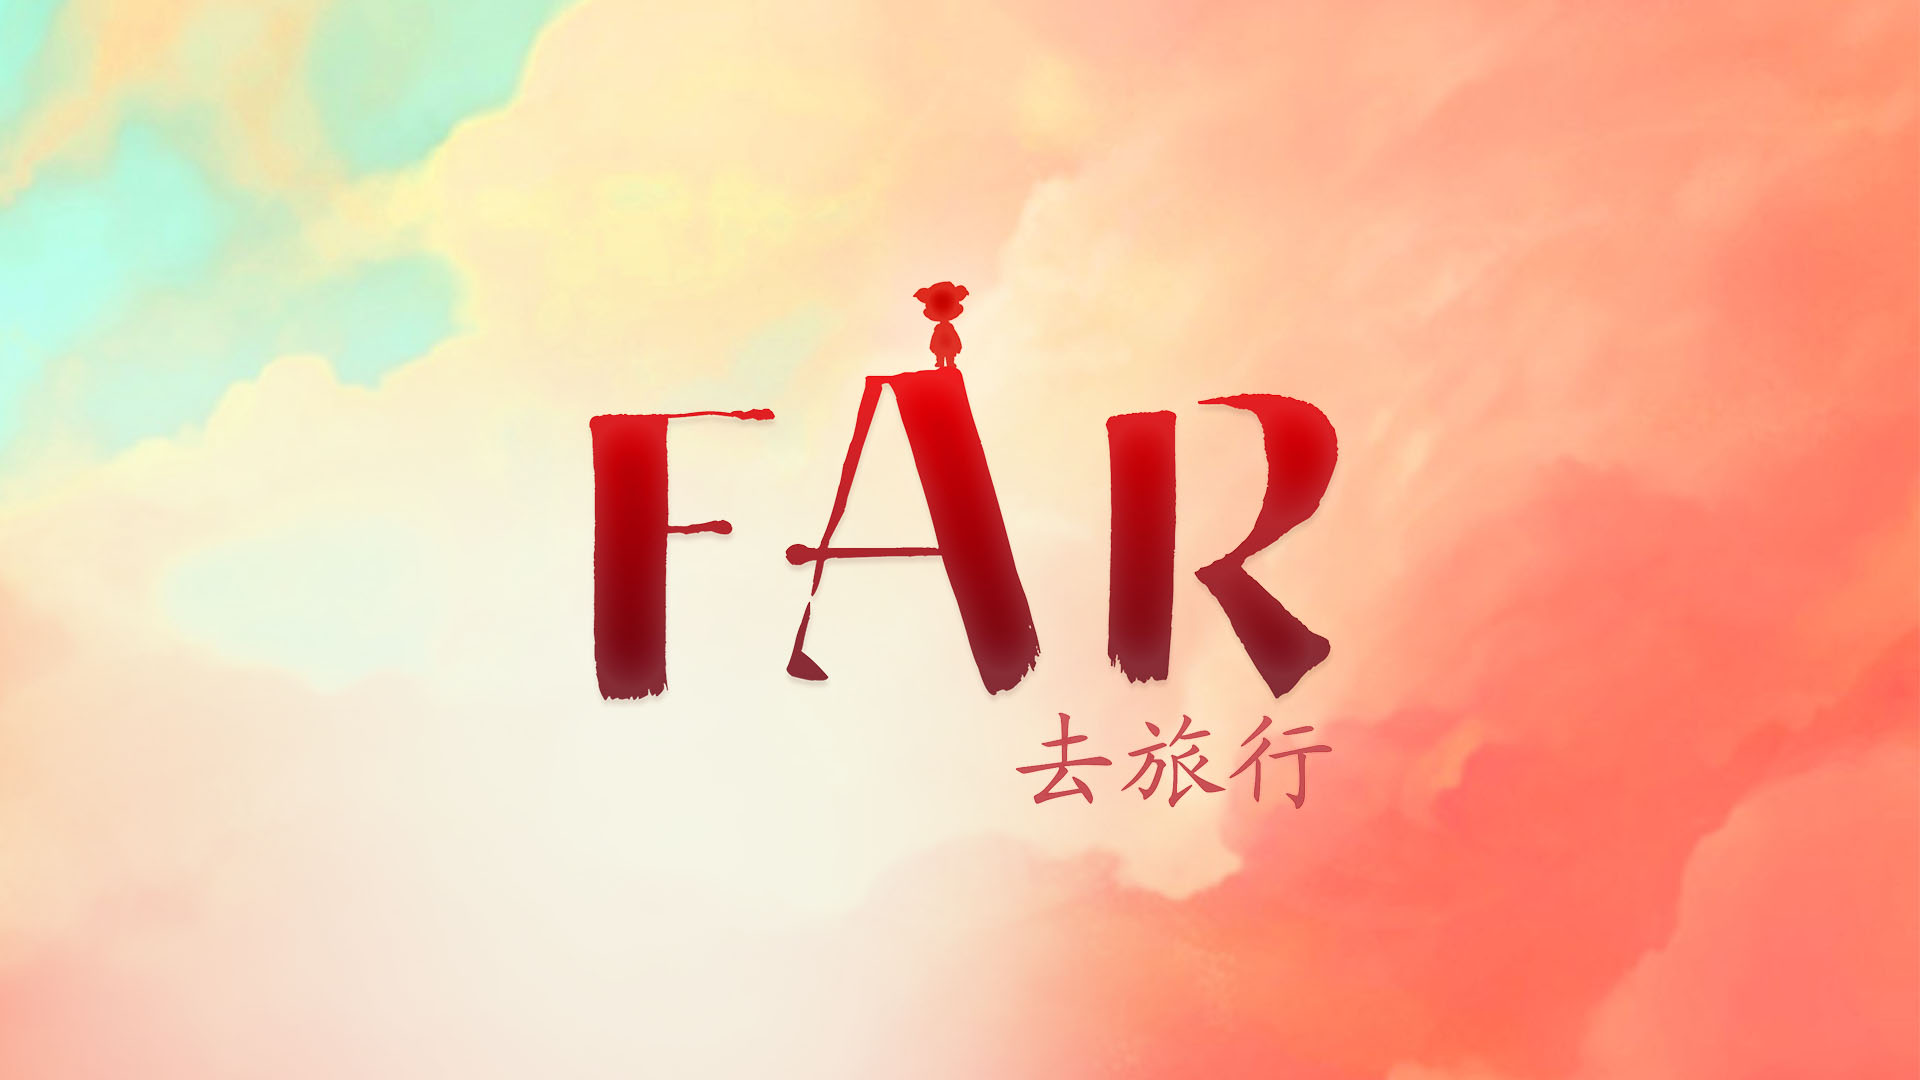 far logo image